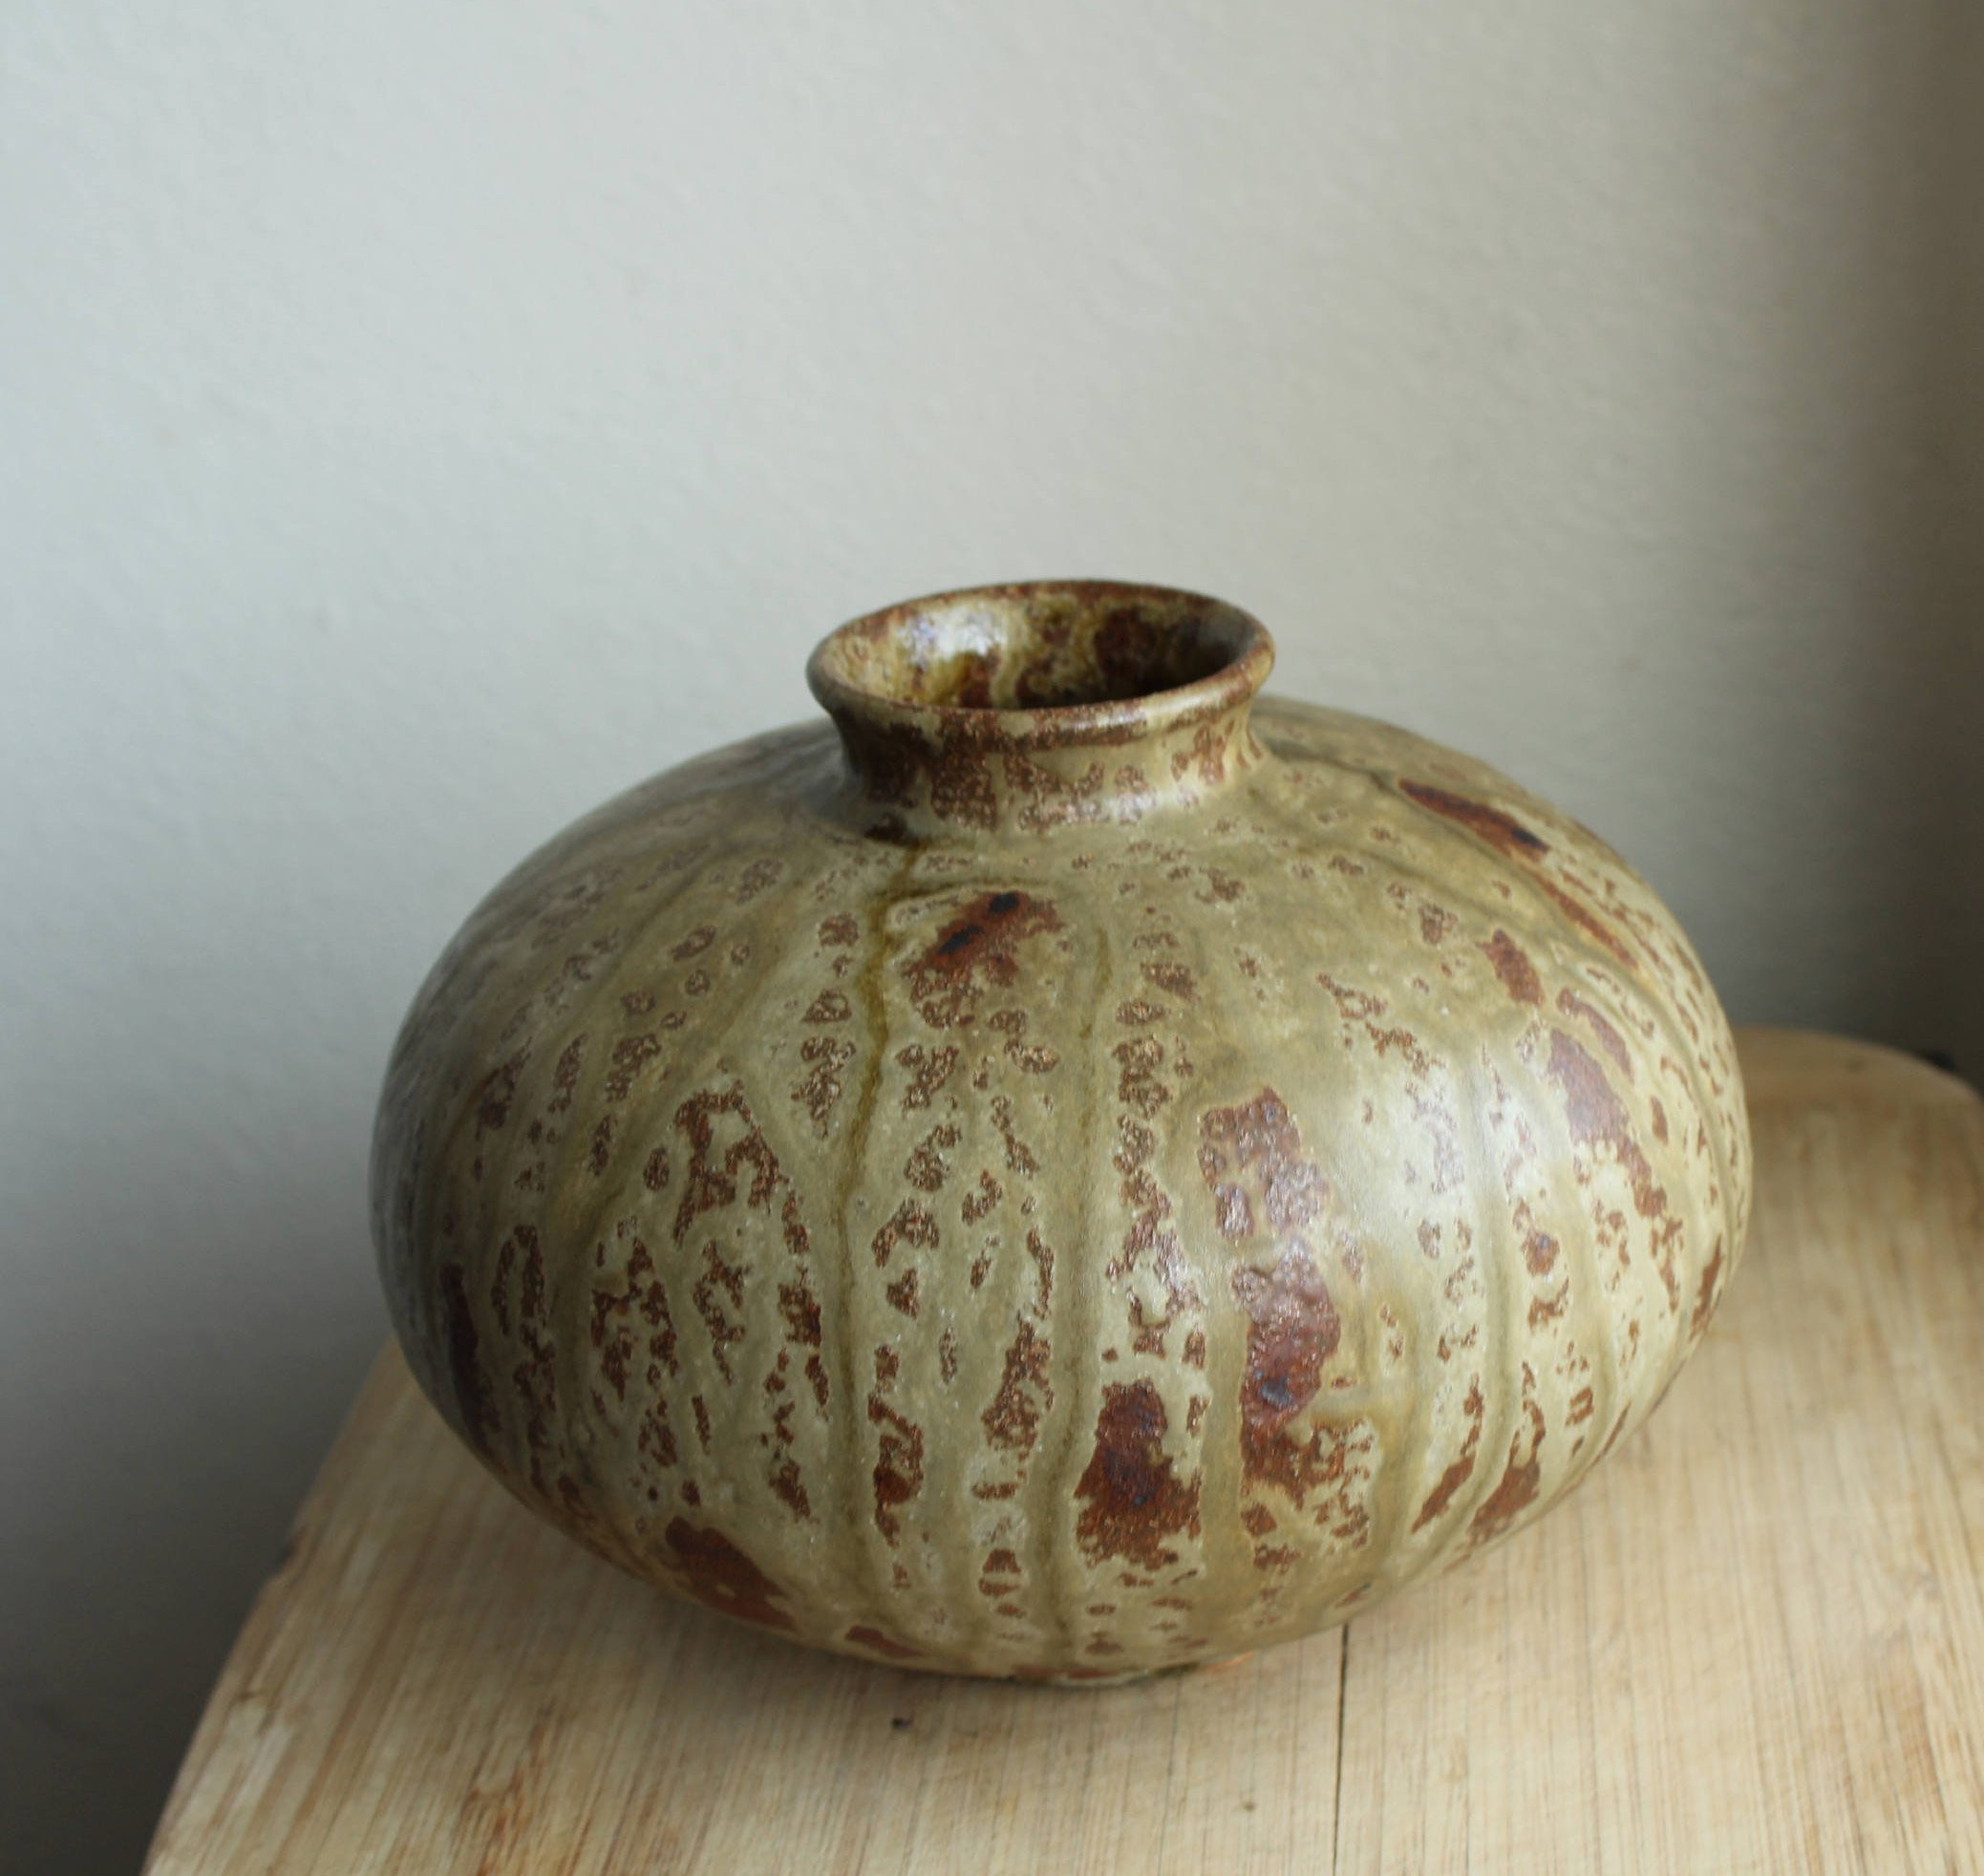 22 Recommended Antique Japanese Bronze Vase 2022 free download antique japanese bronze vase of pottery vase vintage ceramic flower vase in dc29fc294c28ezoom